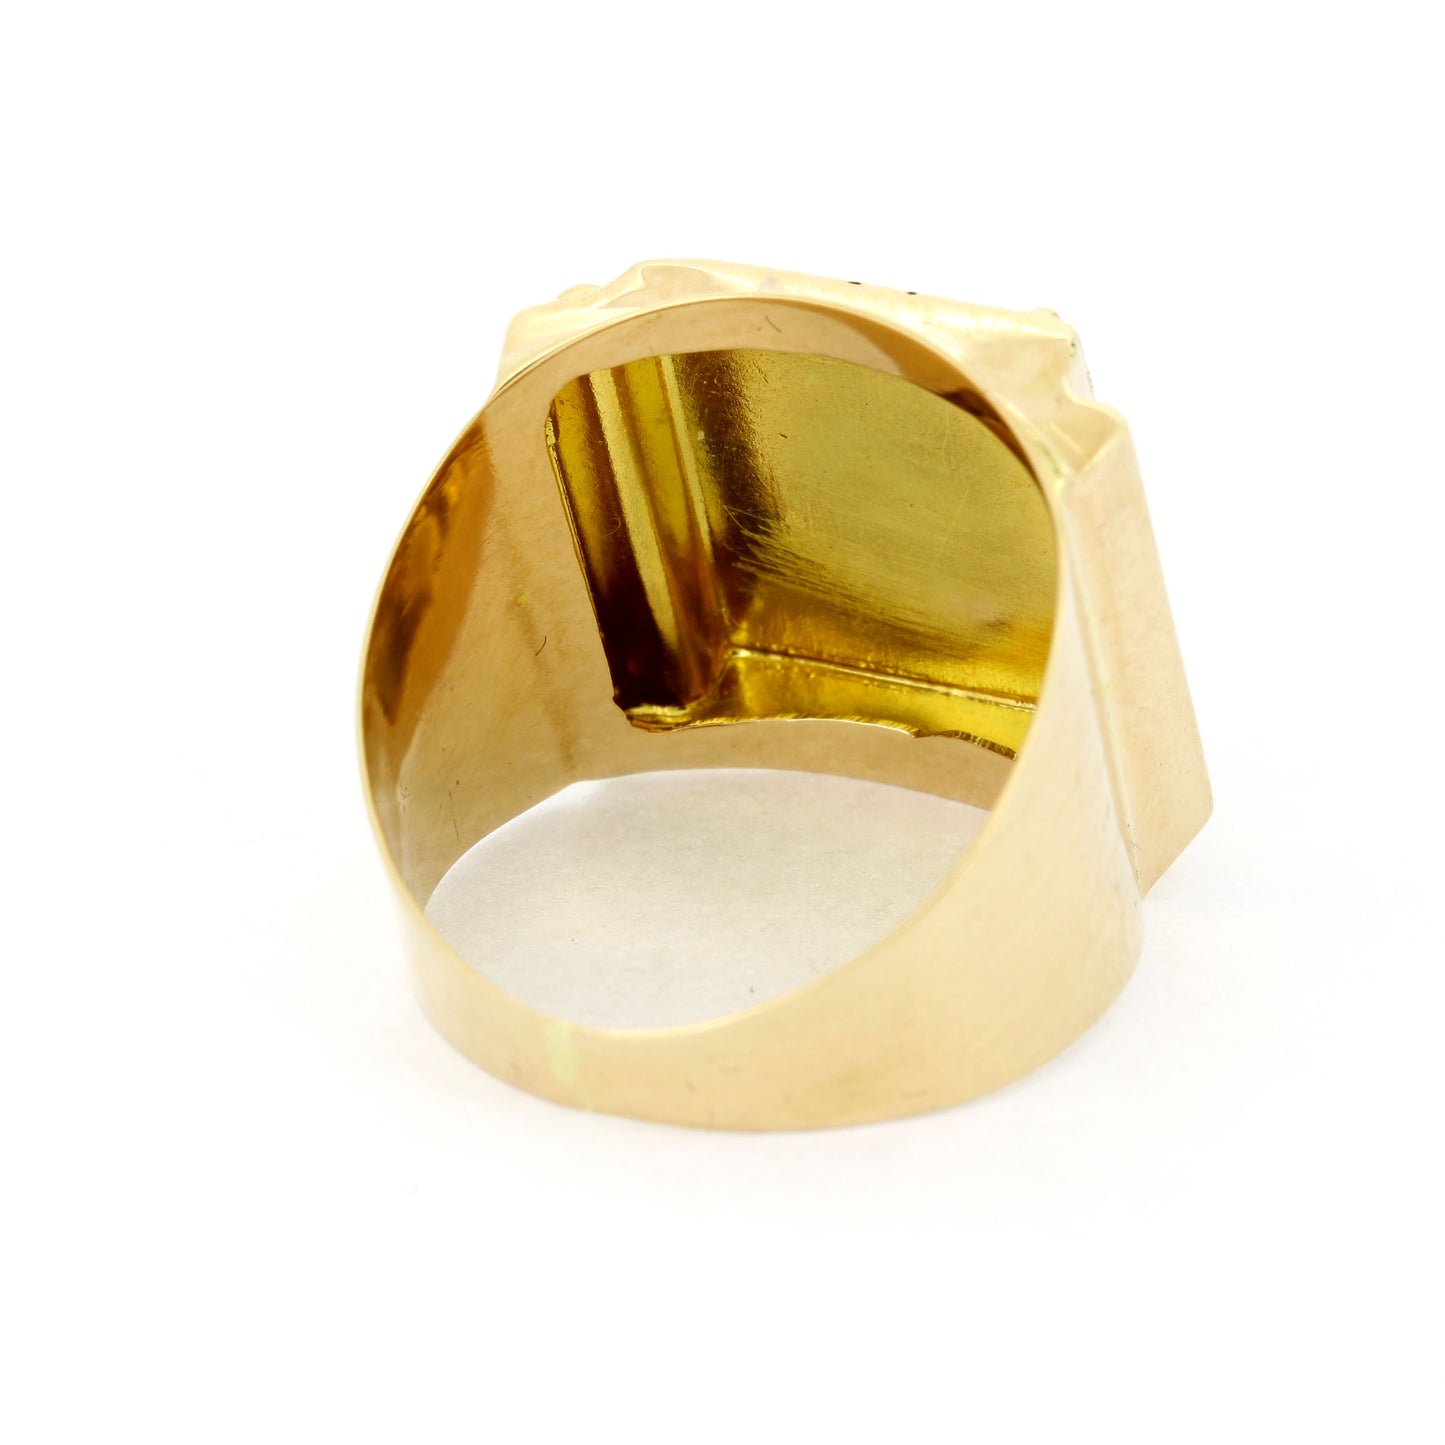 Siegel Ring 585 Gold 14 Kt mit Muster Rotgold - Wert 480,-